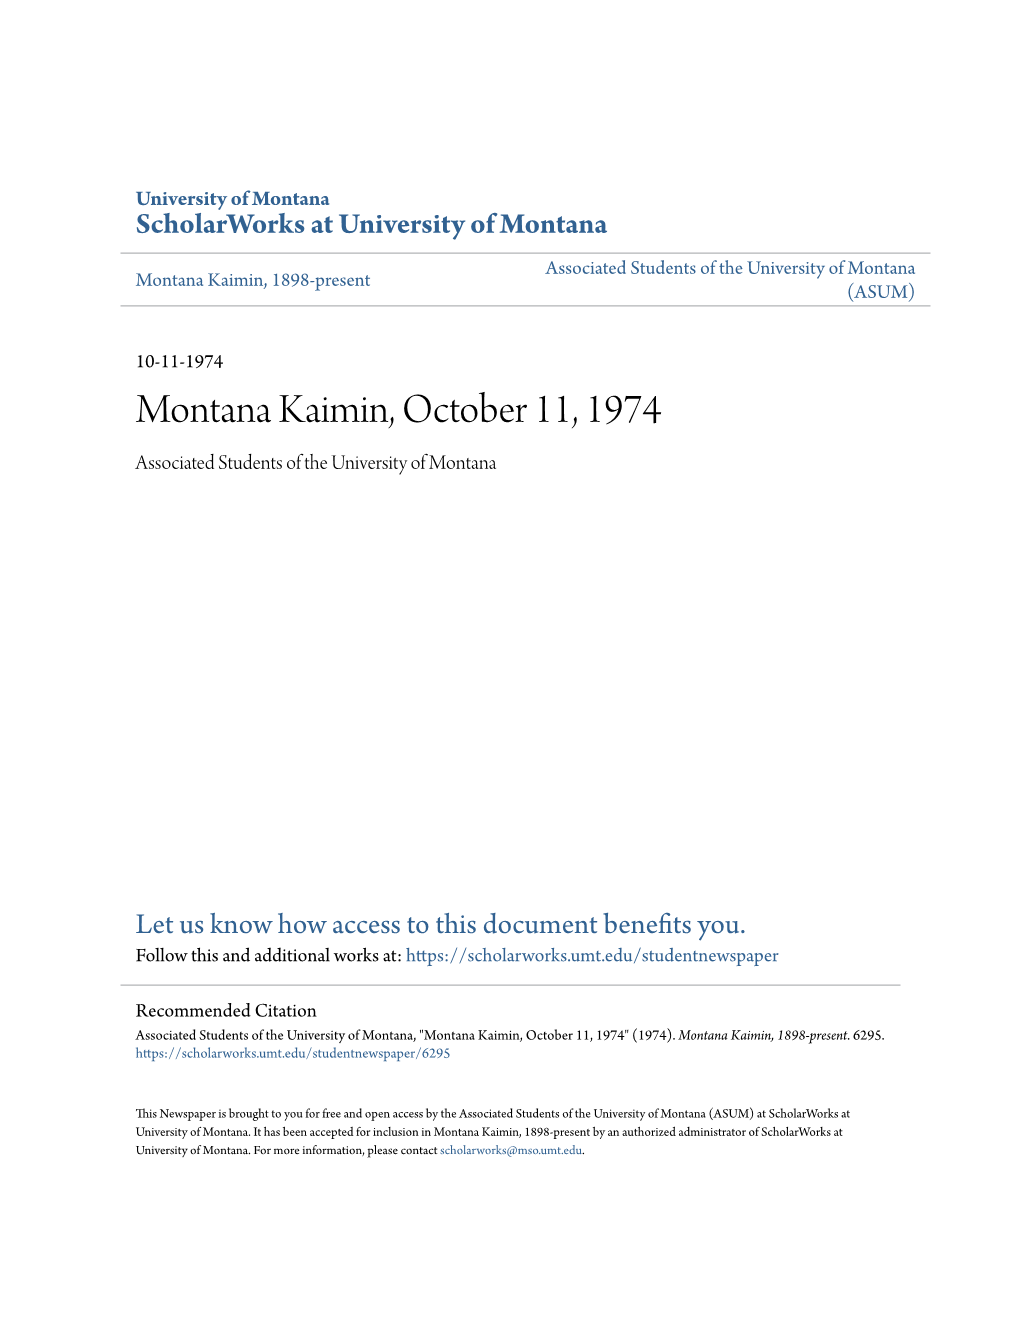 Montana Kaimin, October 11, 1974 Associated Students of the University of Montana